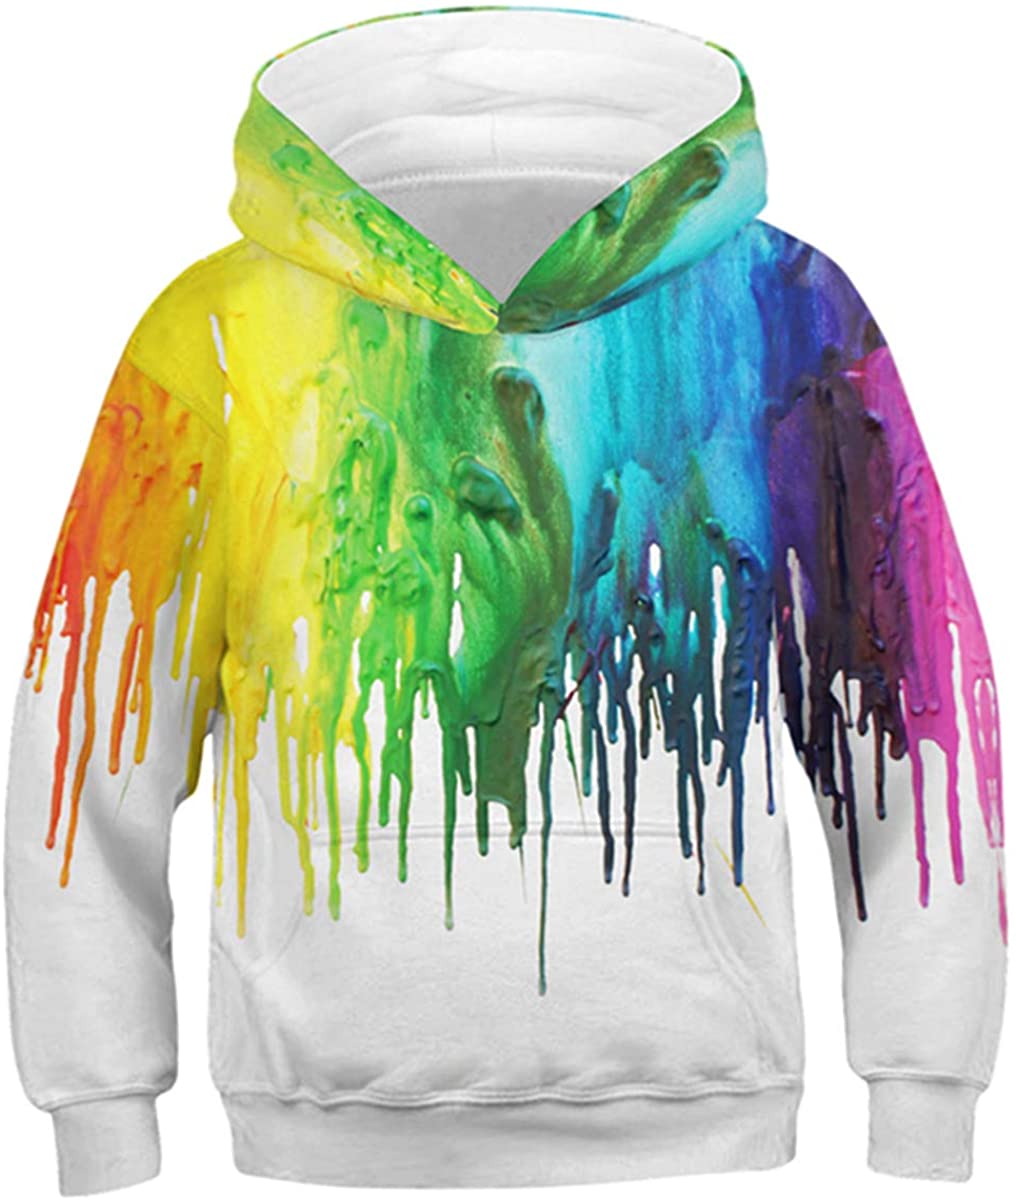 Funnycokid Teens Boys Girls Pullover Hoodies Funny 3D Print Hooded Sweatshirts for Kids 6-16Y